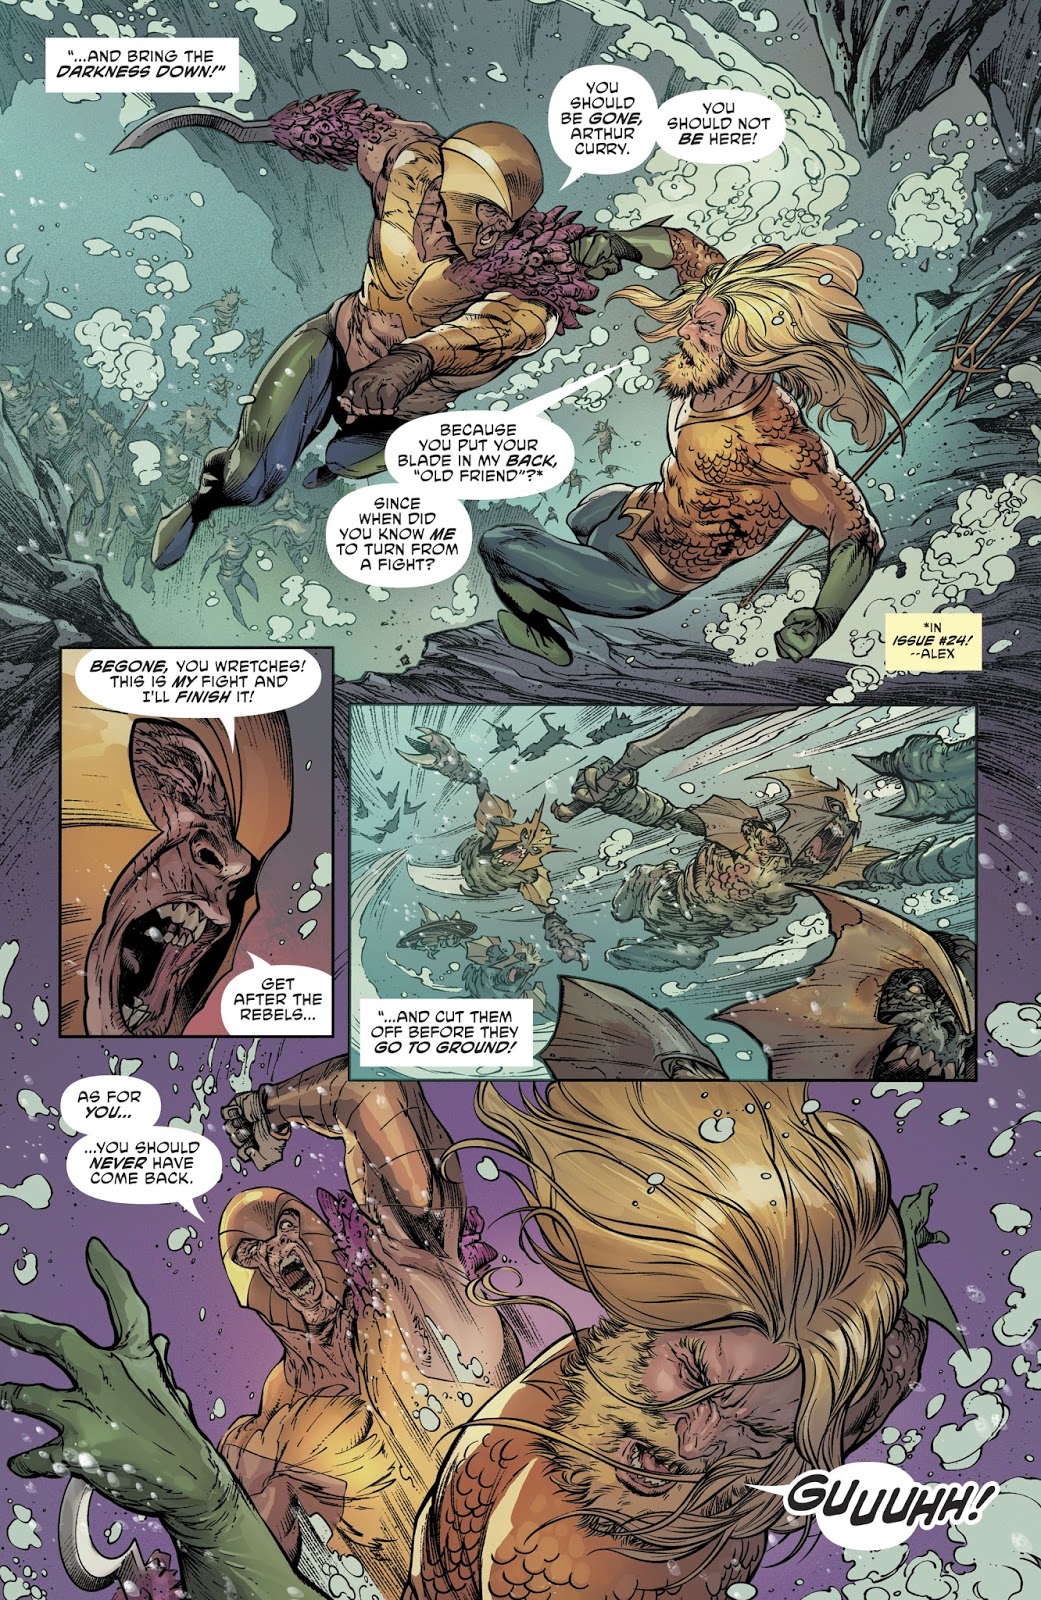 Why Murk Betrayed Aquaman 